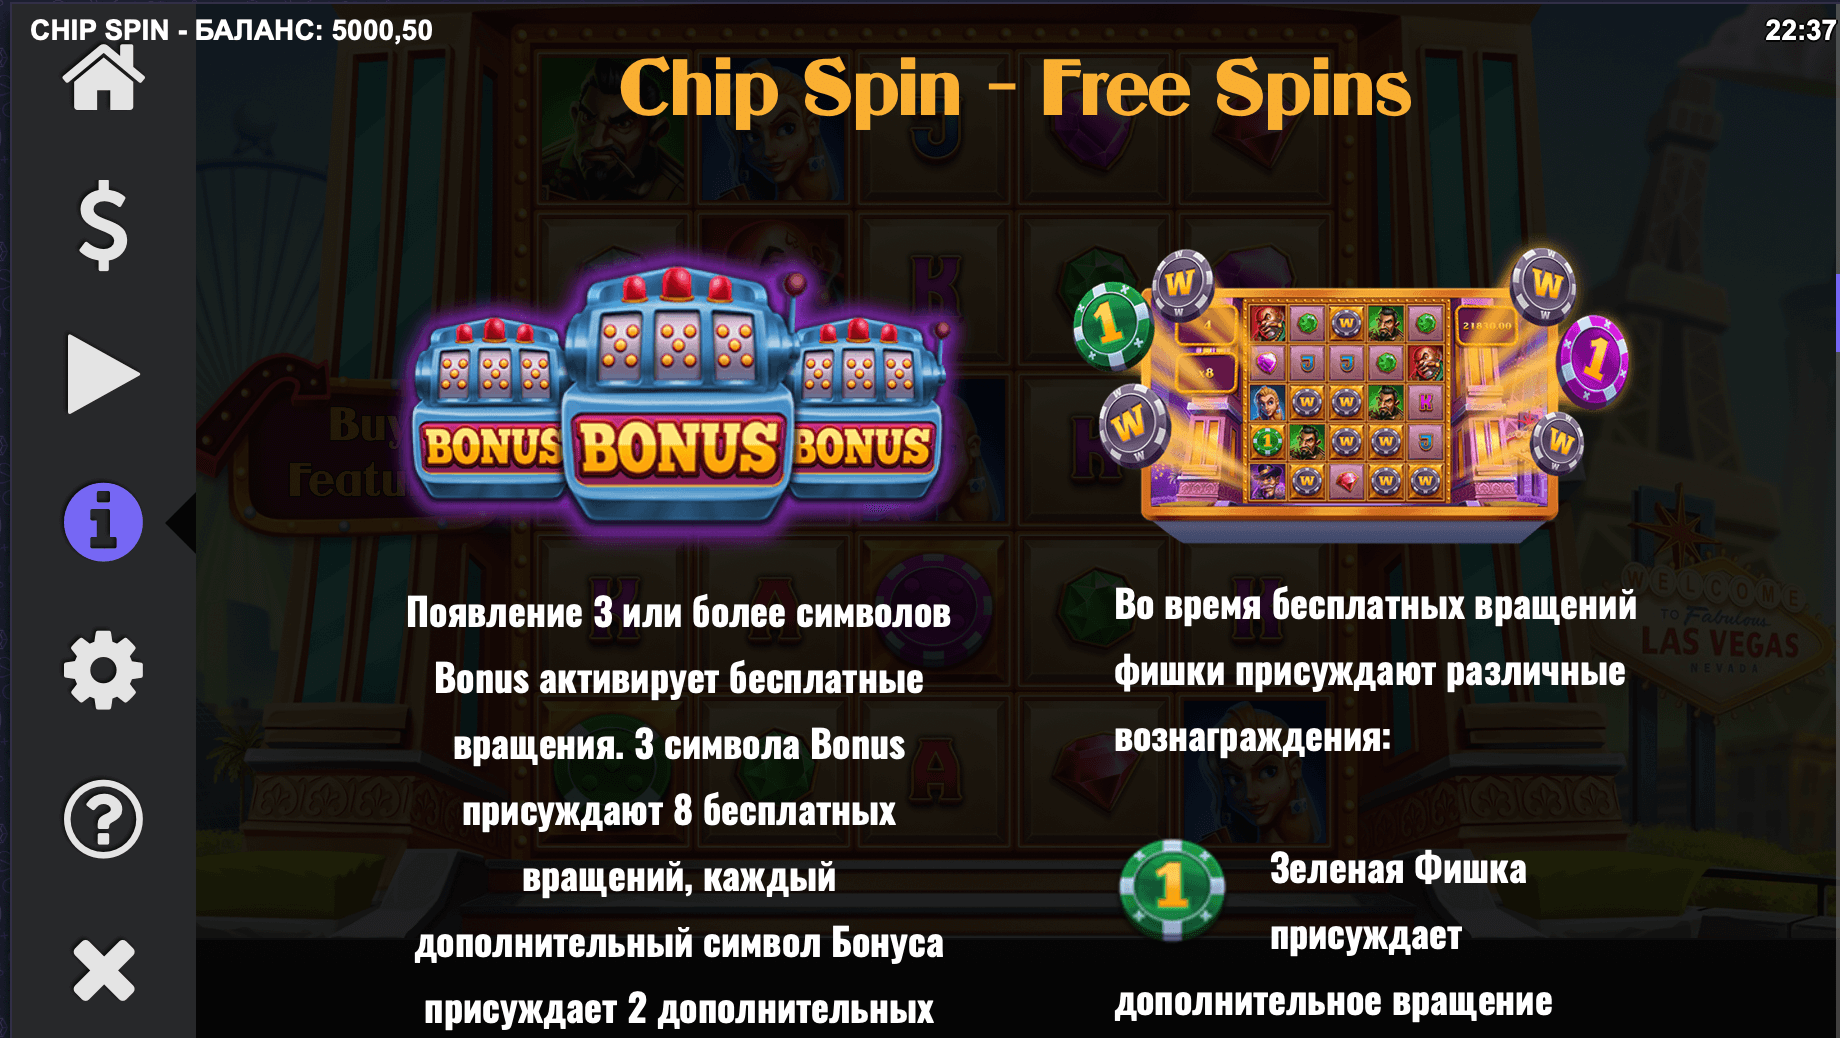 Chip Spin عملية اللعبة